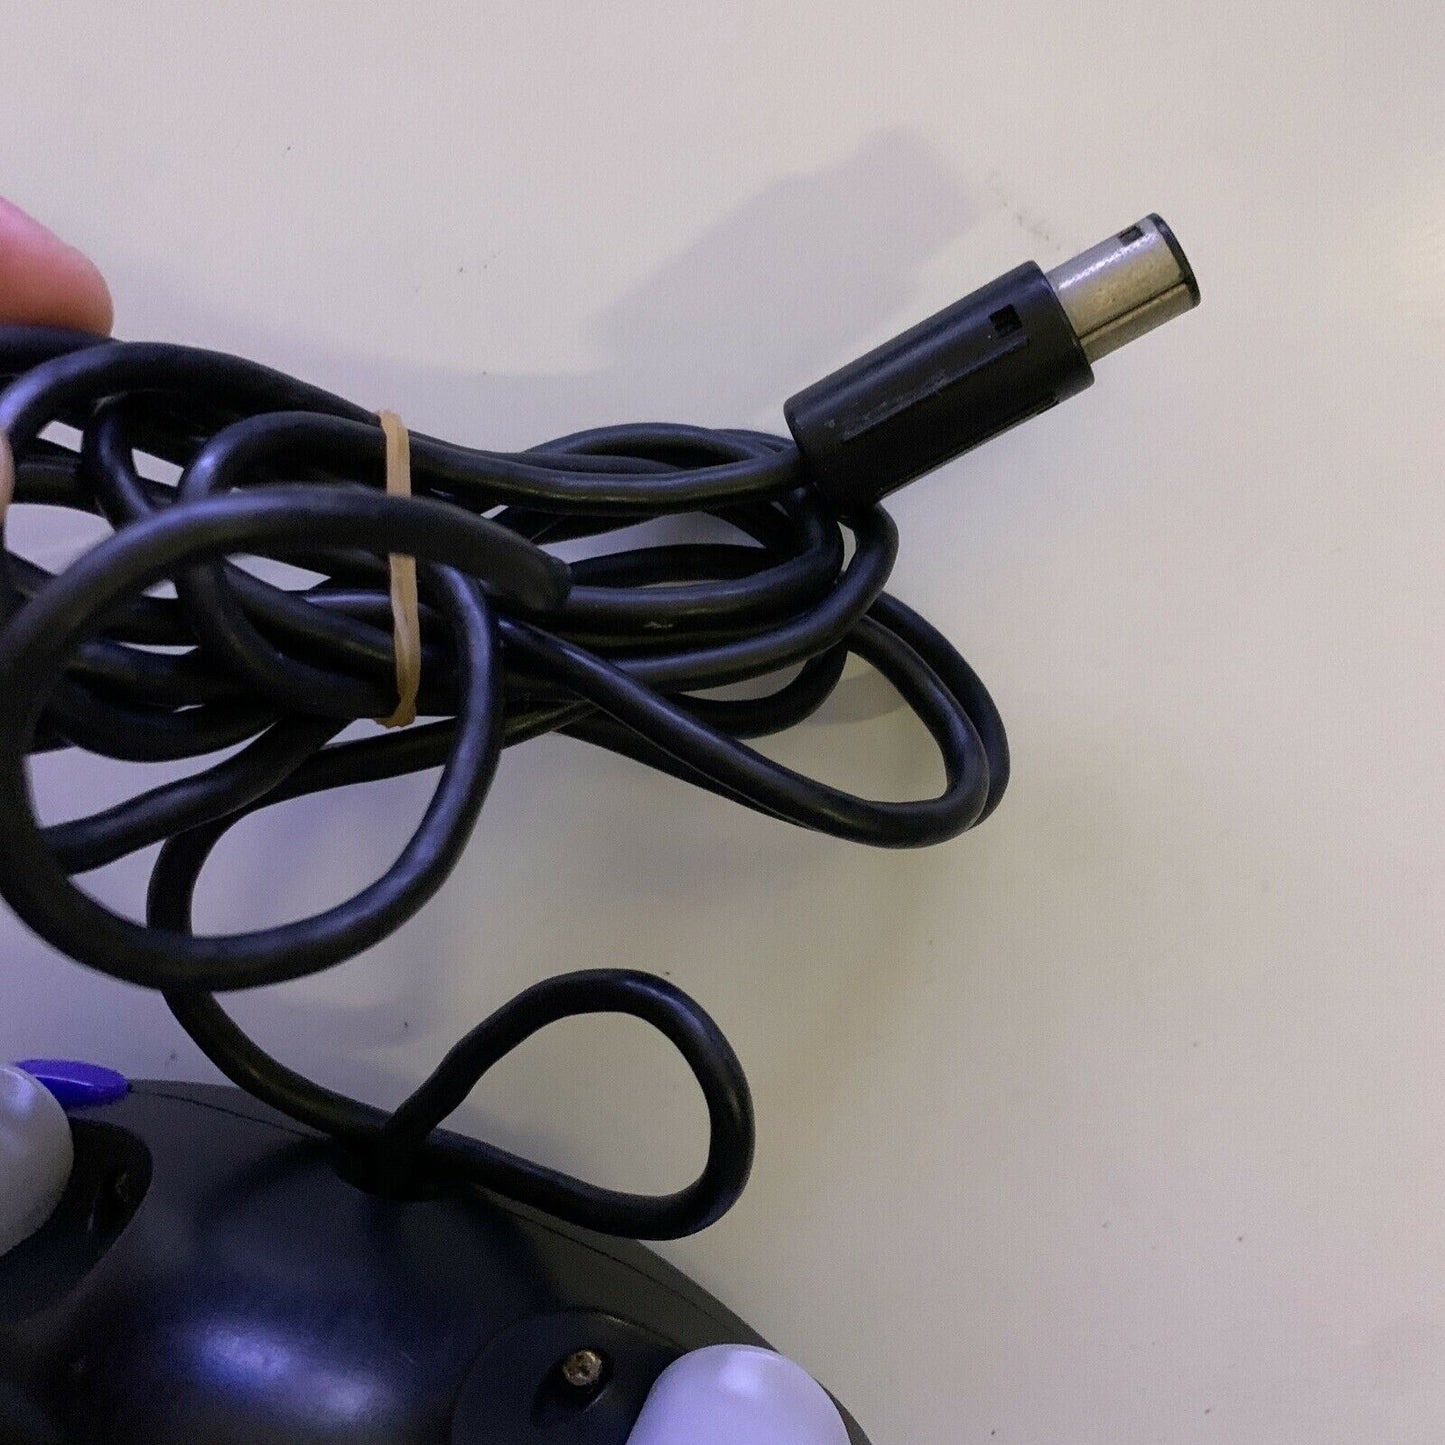 Official Nintendo GameCube Controller Jet Black DOL-003. Joystick & button vgood